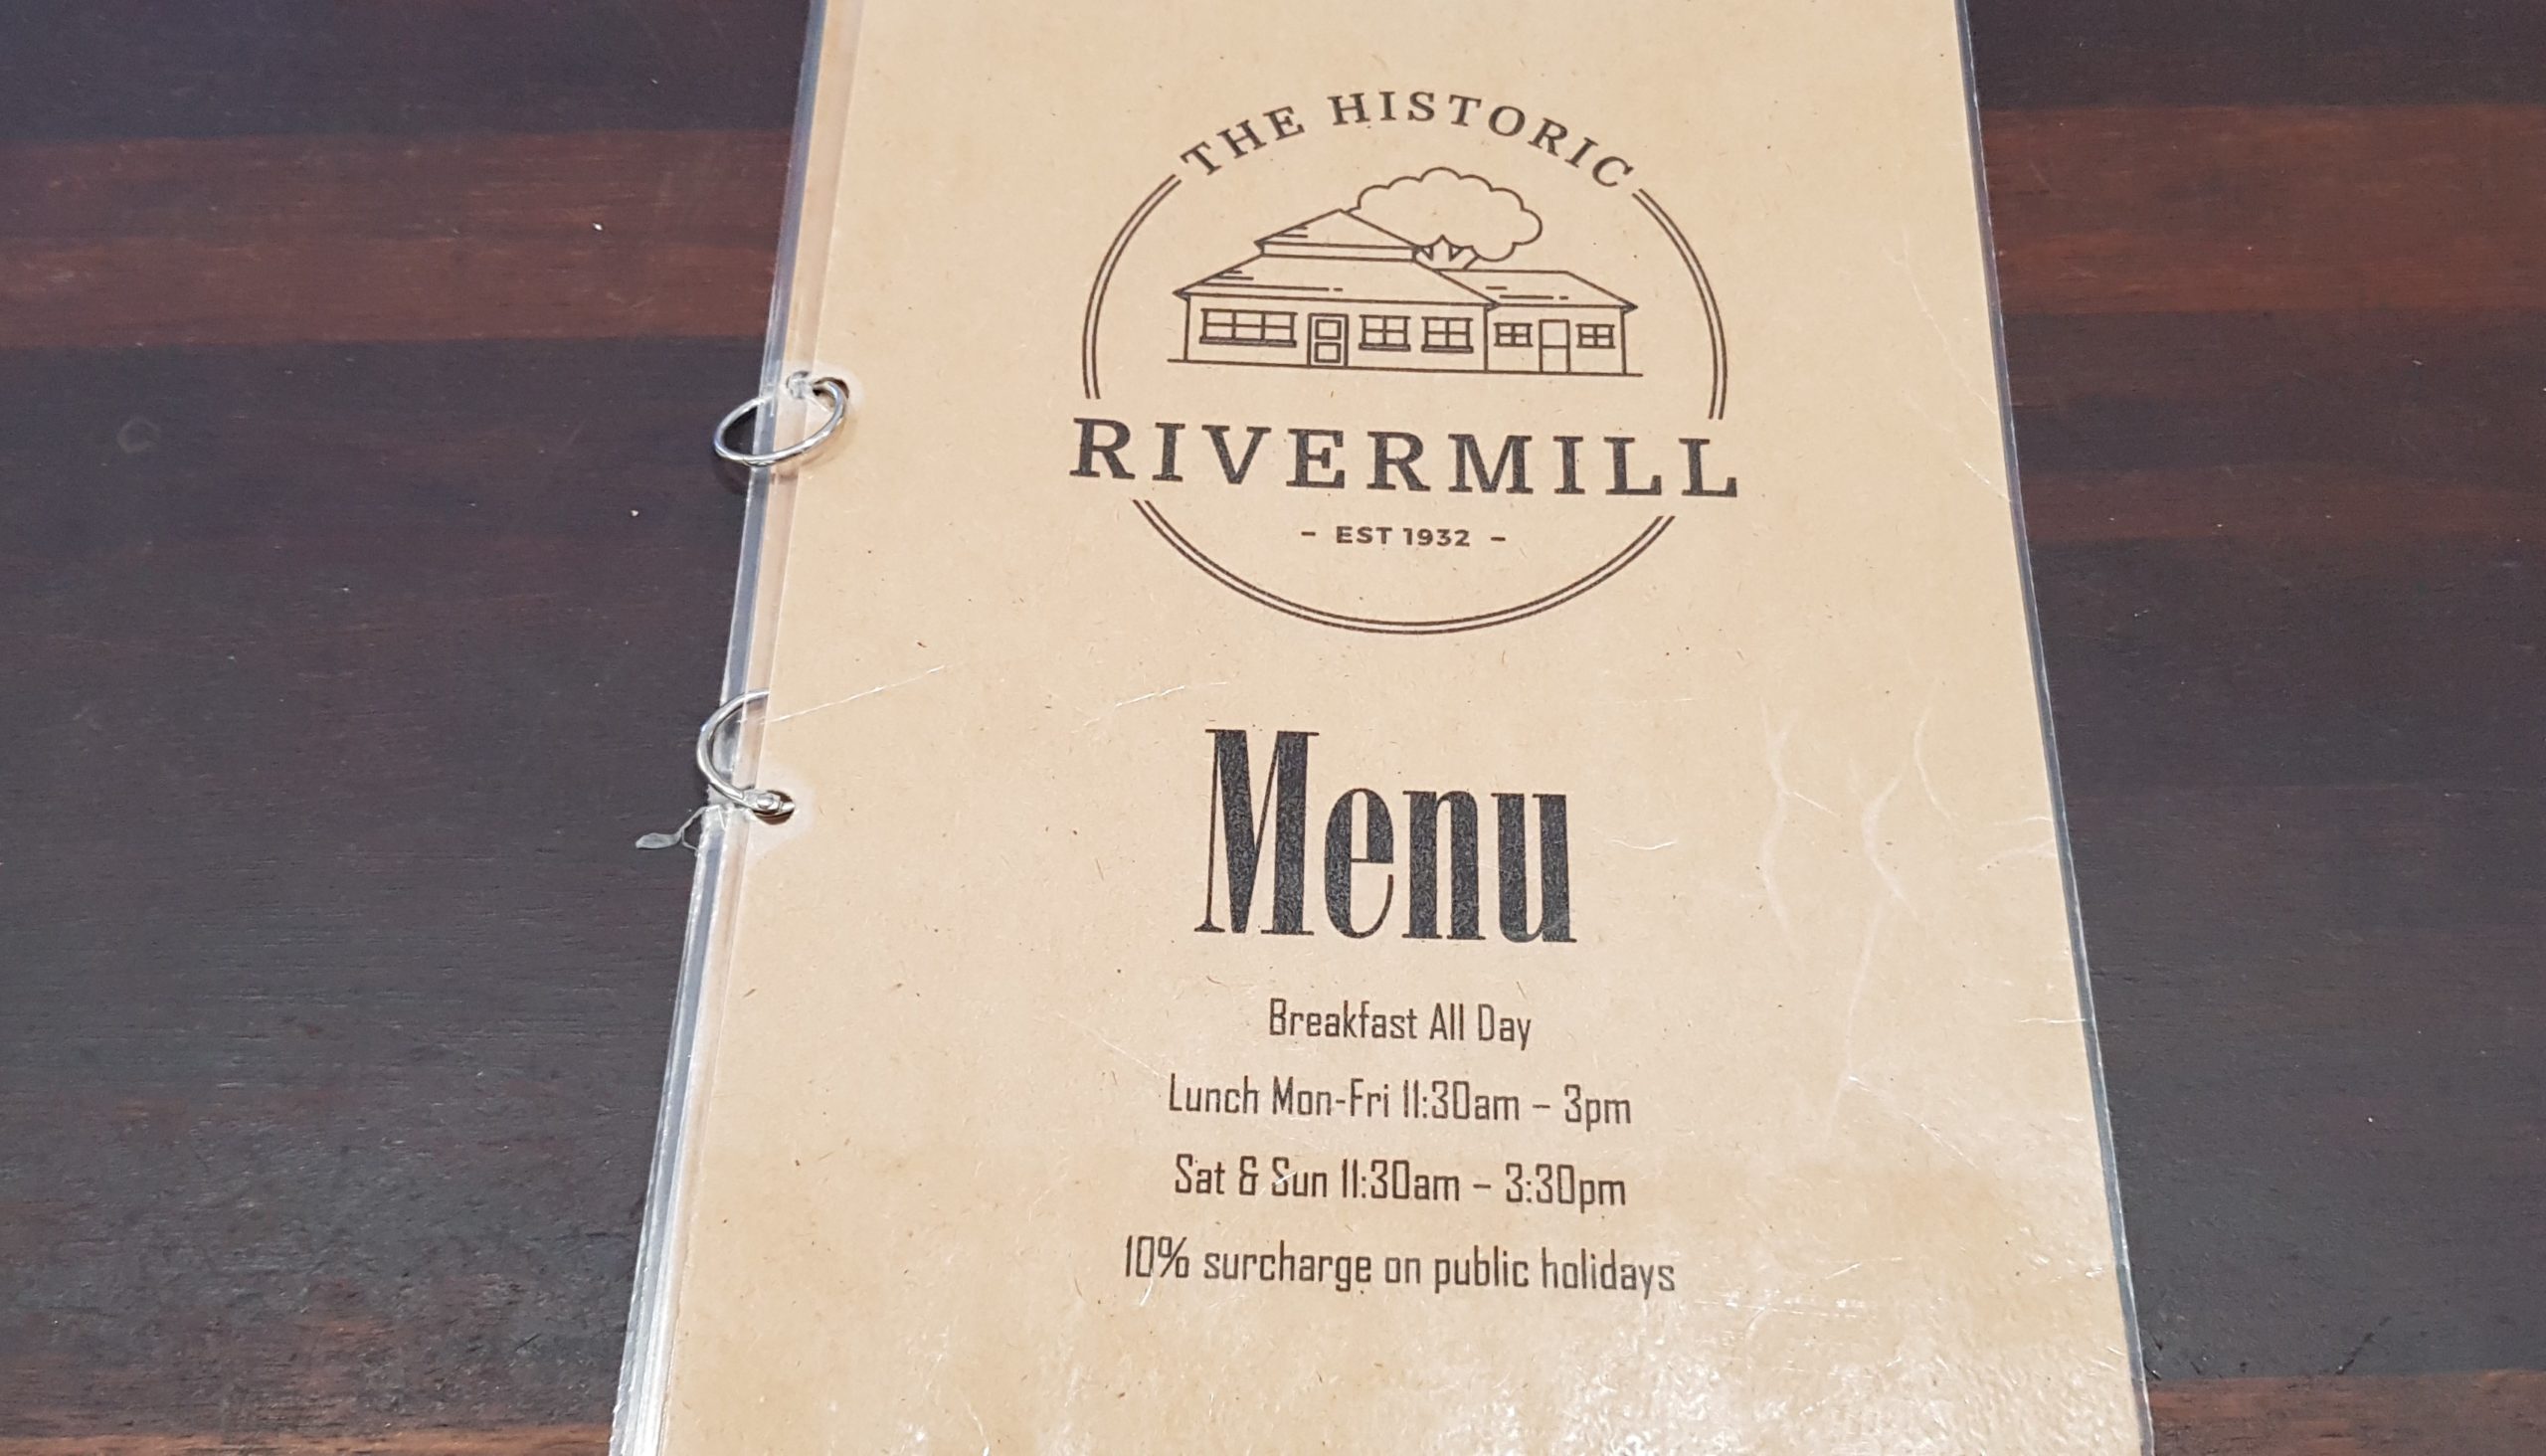 The Historic Rivermill Menu